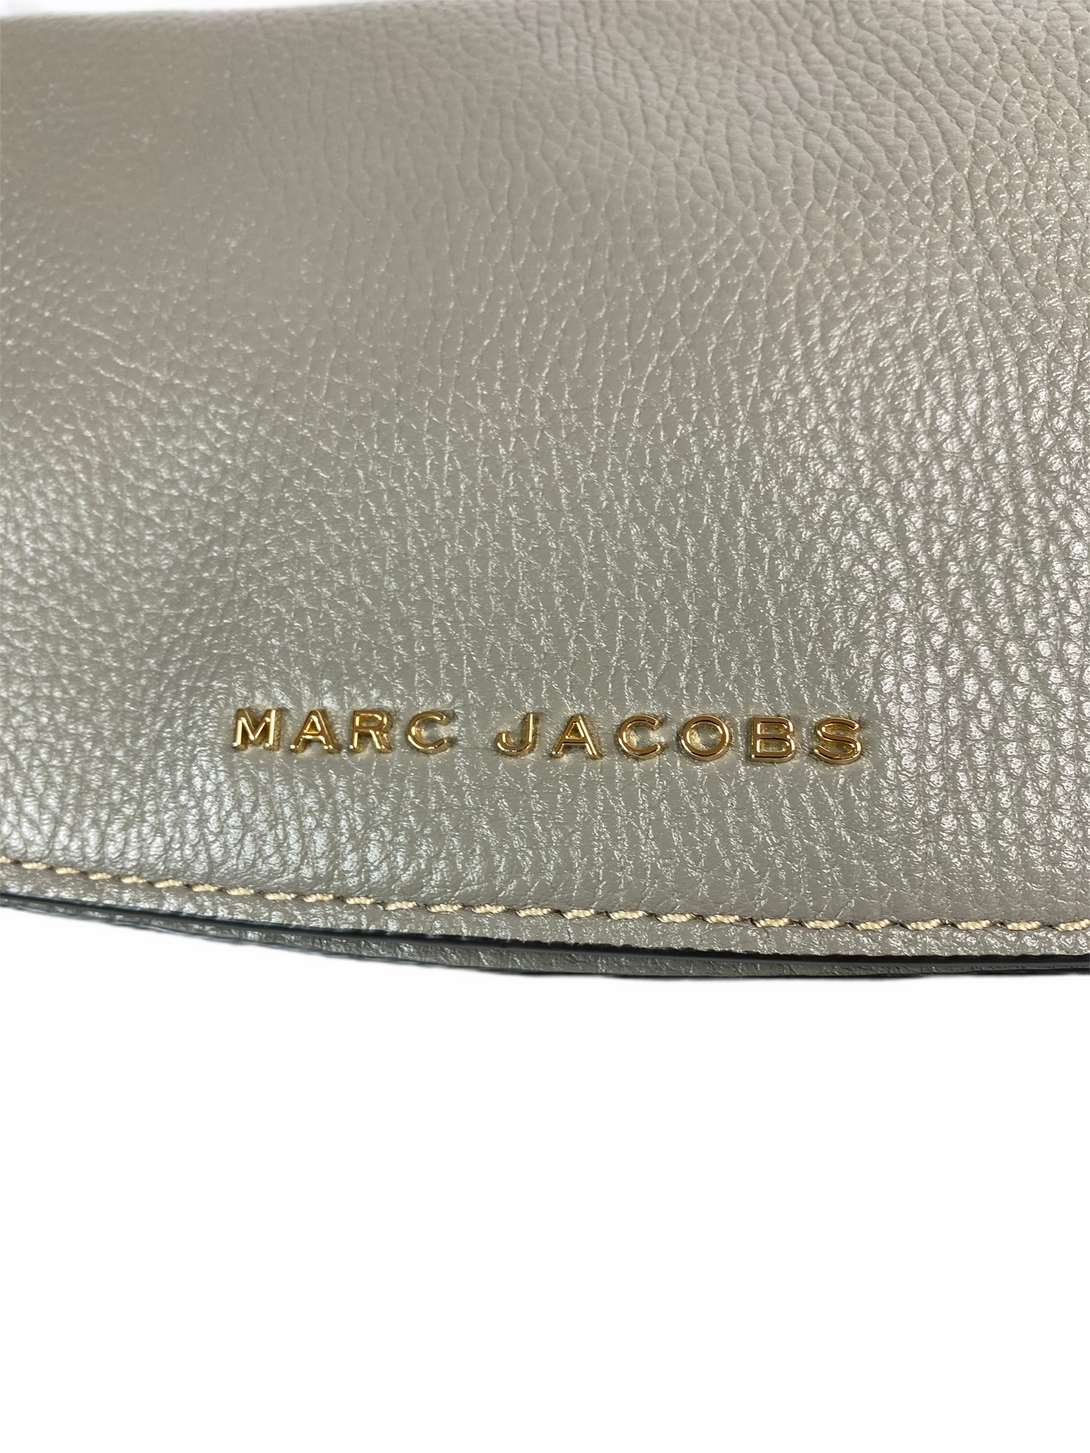 Marc Jacobs Pale Grey Leather Crossbody - As Seen on Instagram 26/08/2020 - Siopaella Designer Exchange